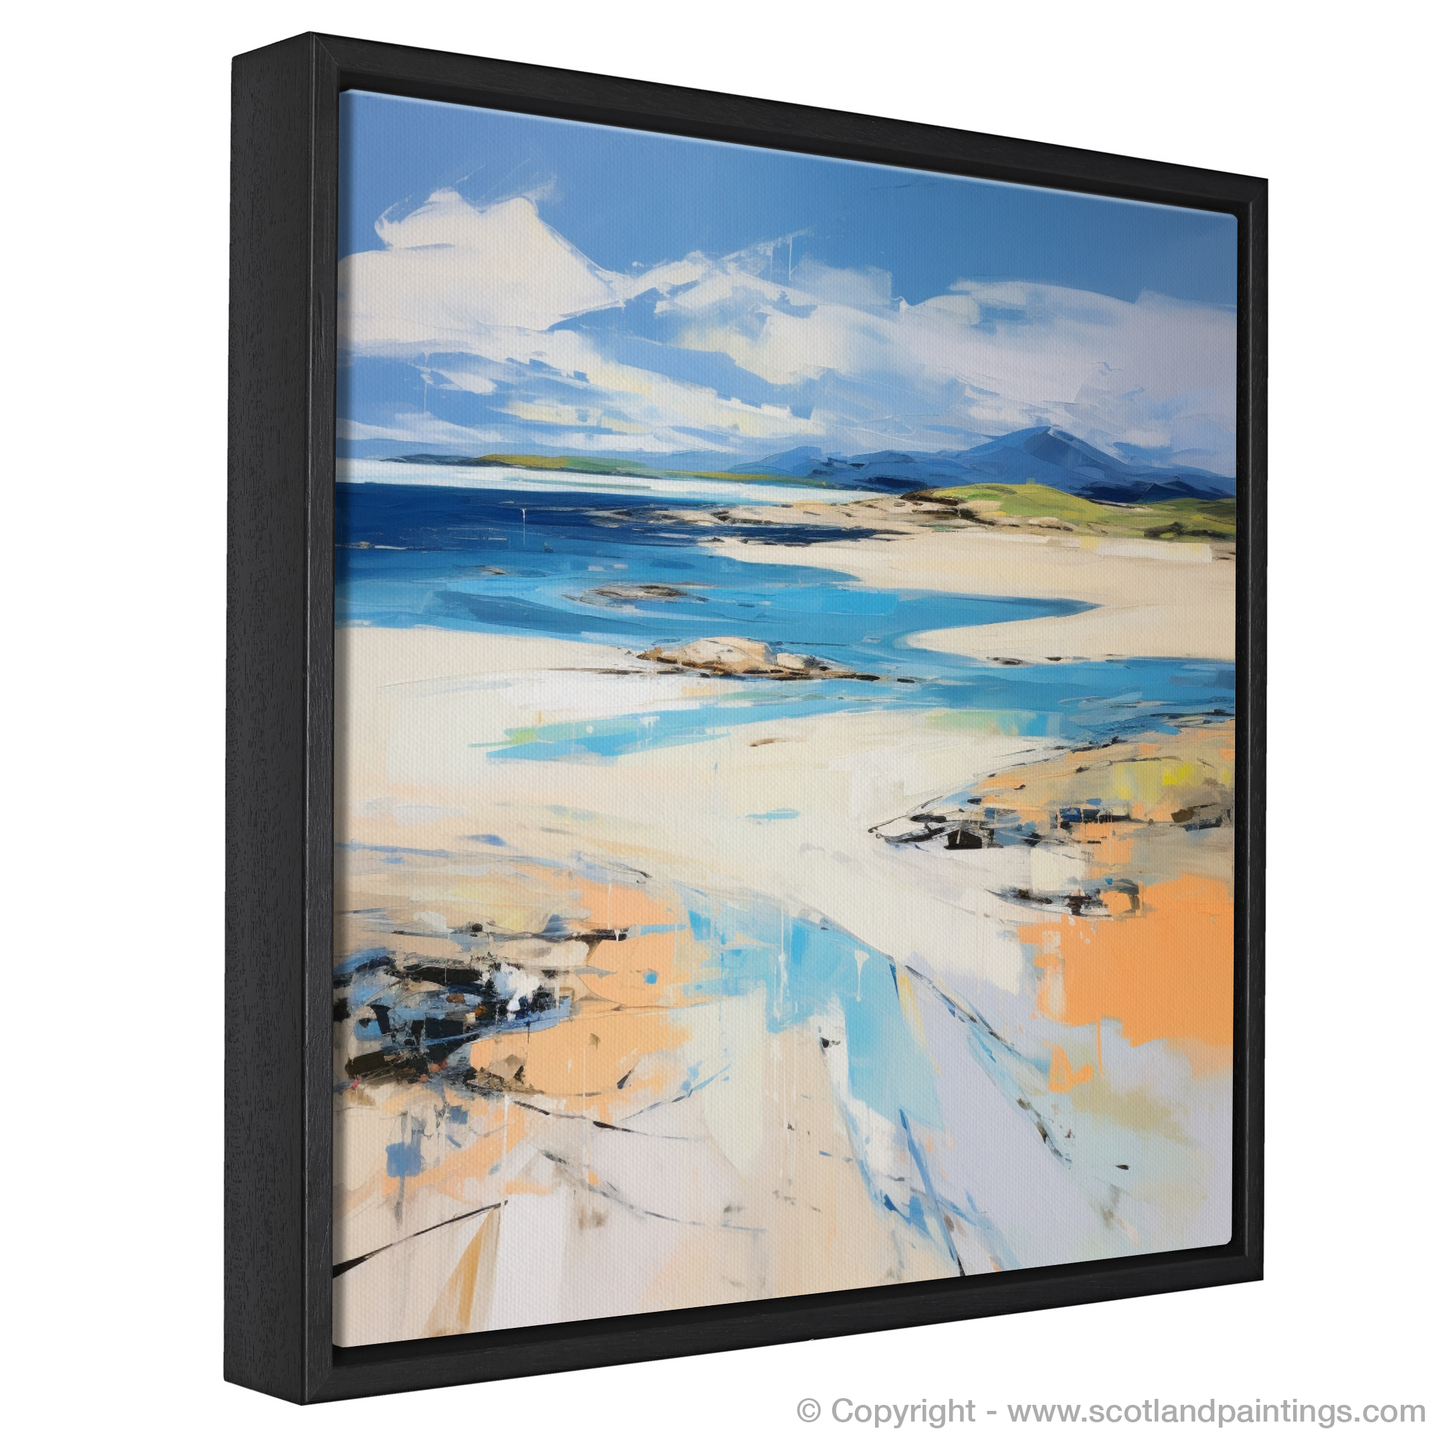 Painting and Art Print of Camusdarach Beach, Arisaig entitled "Serene Shores of Camusdarach Beach: An Abstract Impressionist Interpretation".